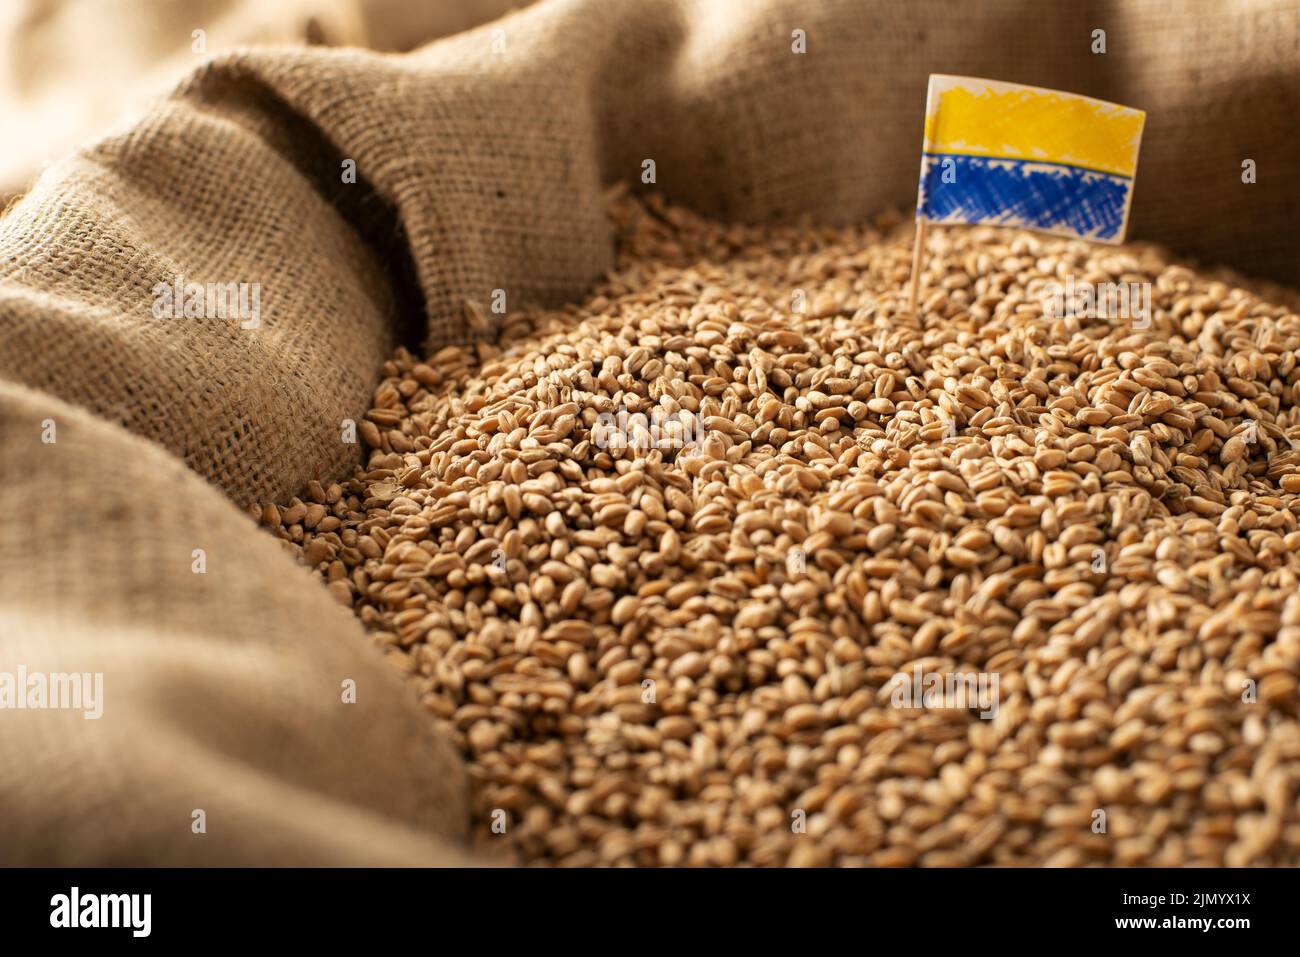 Burlap sack with wheat grains and Ukrainian flag concept Stock Photo